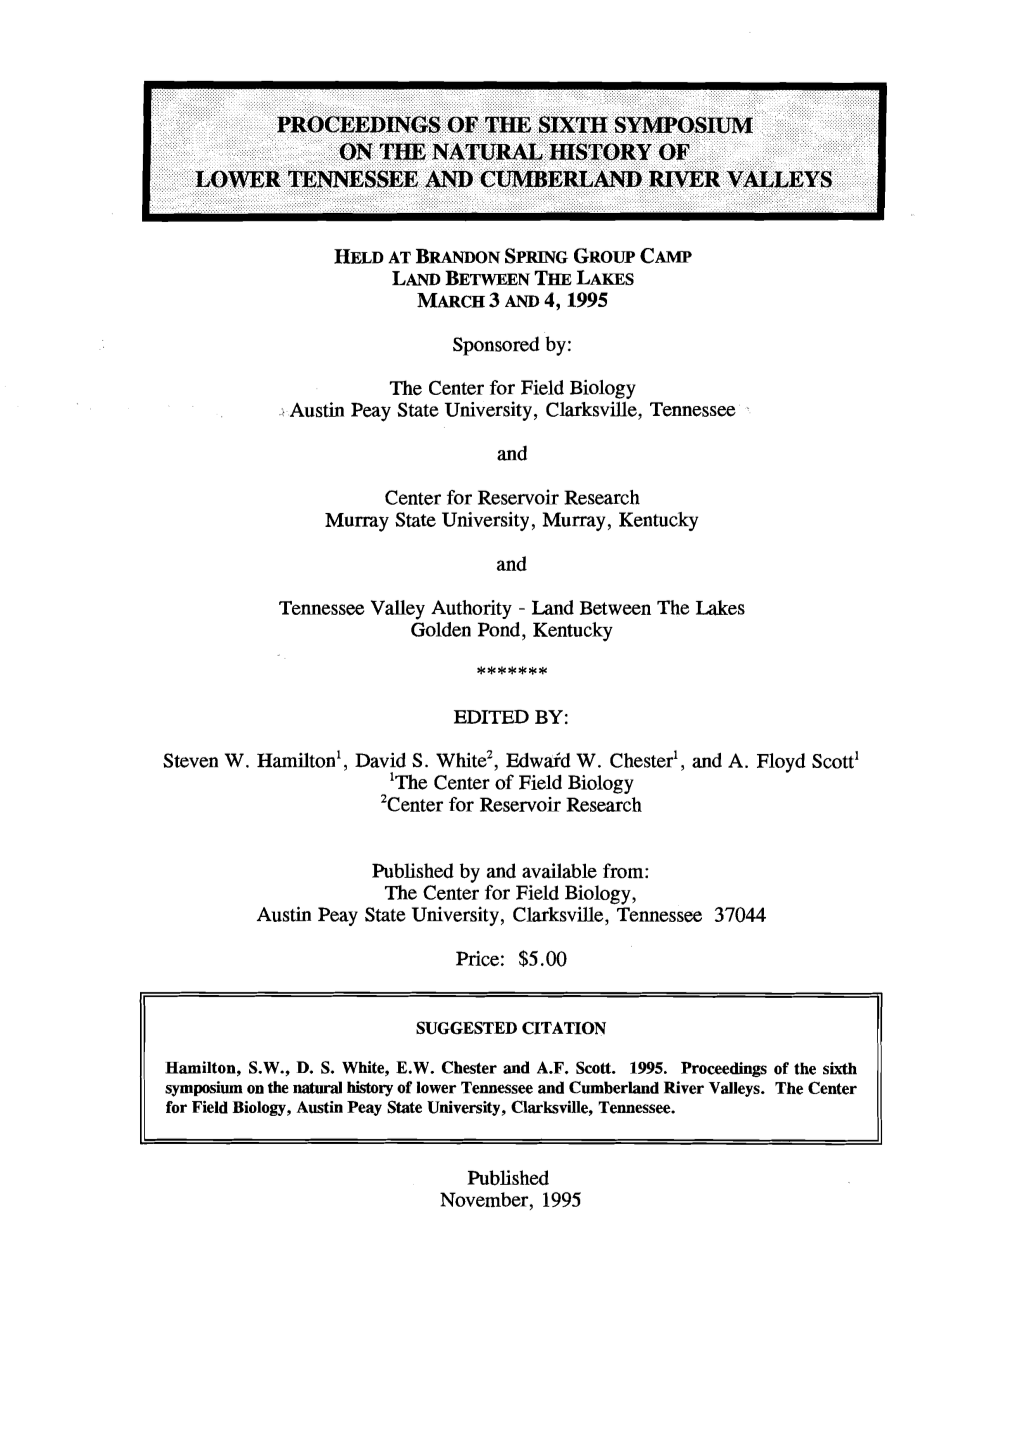 6Th Symposium Proceedings (1995)